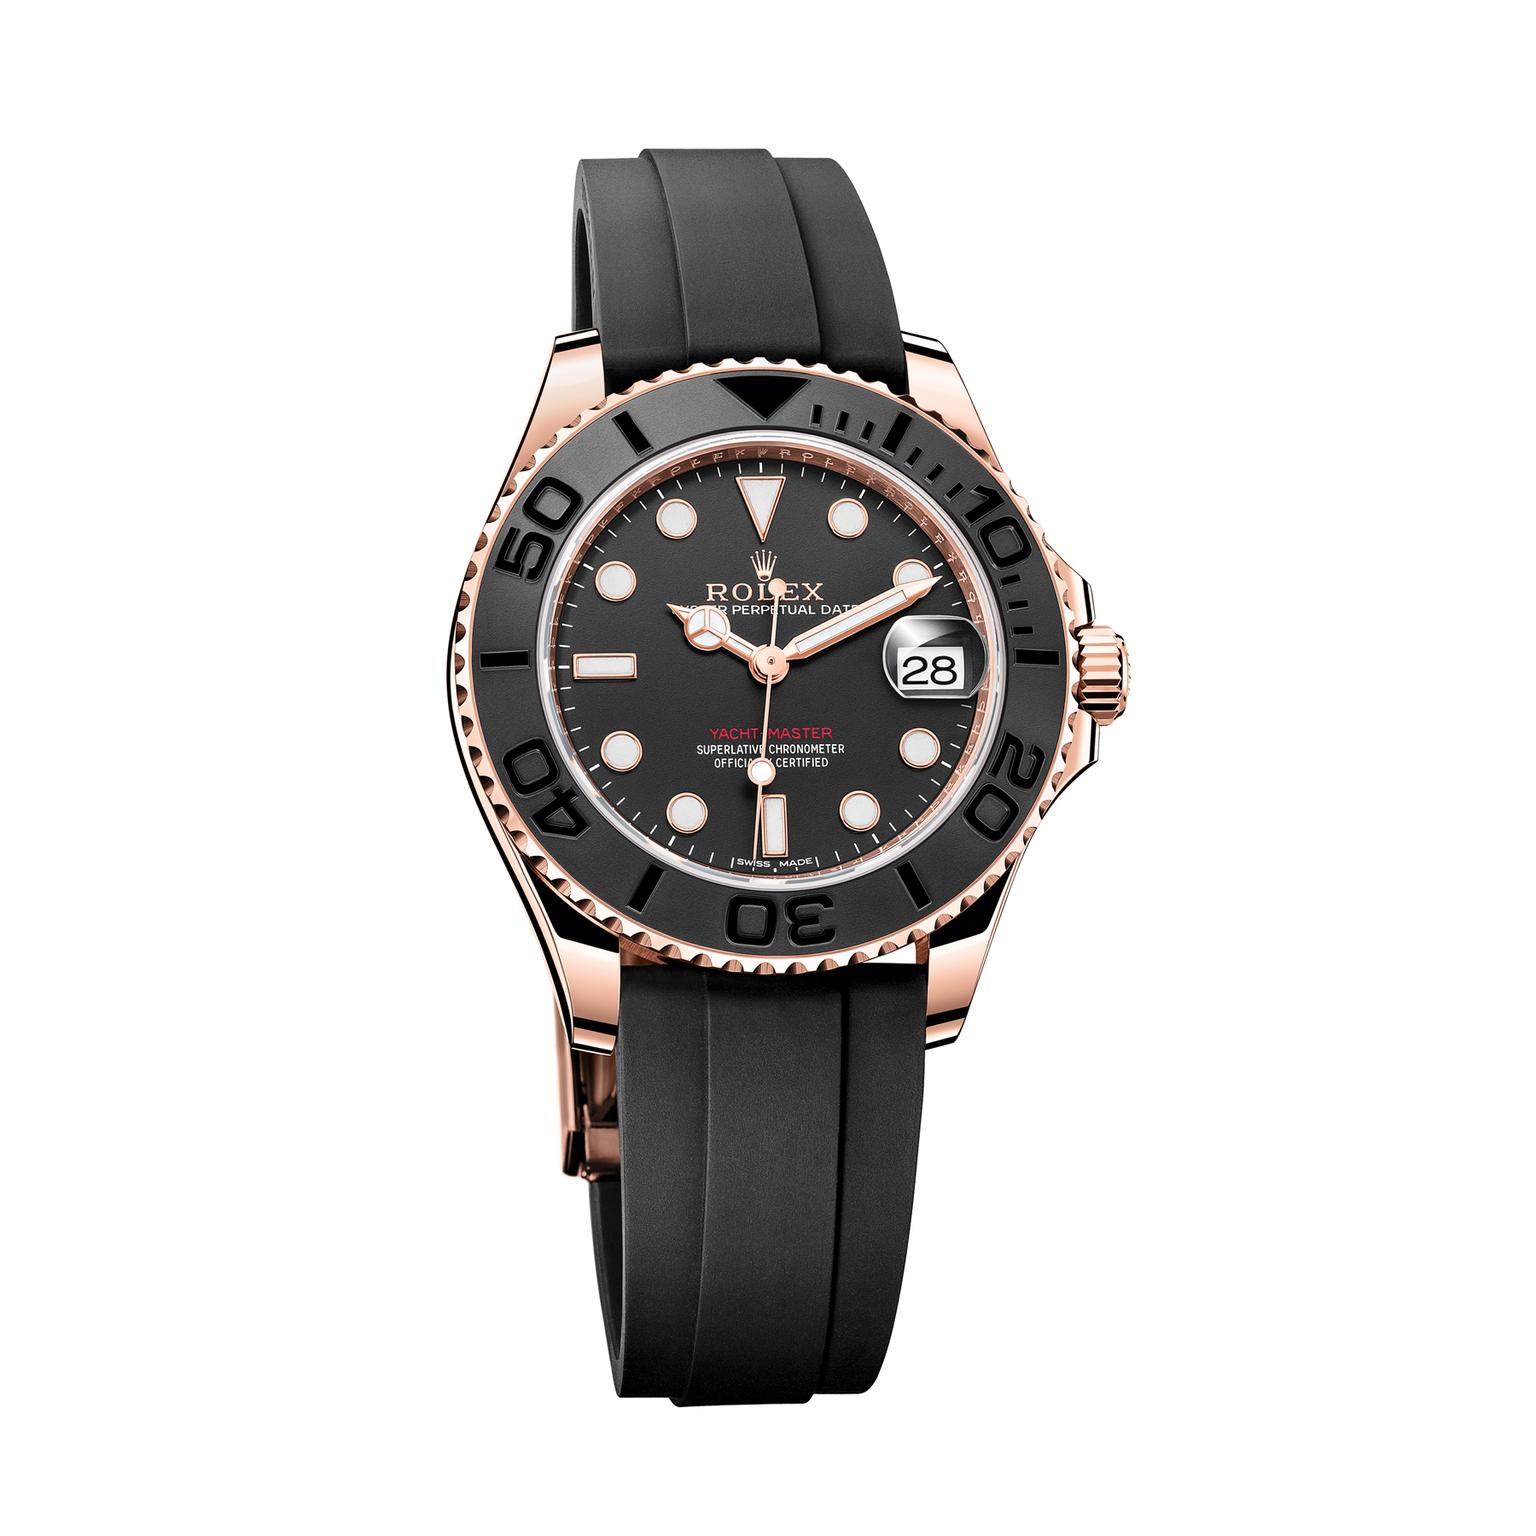 Rolex Yacht-Master 37mm watch in Everose gold